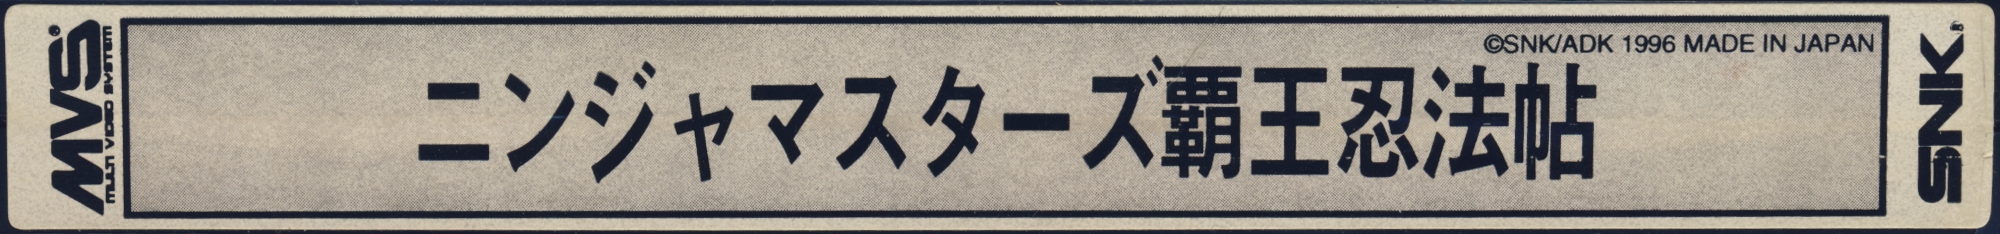 Ninja masters jp label.jpg